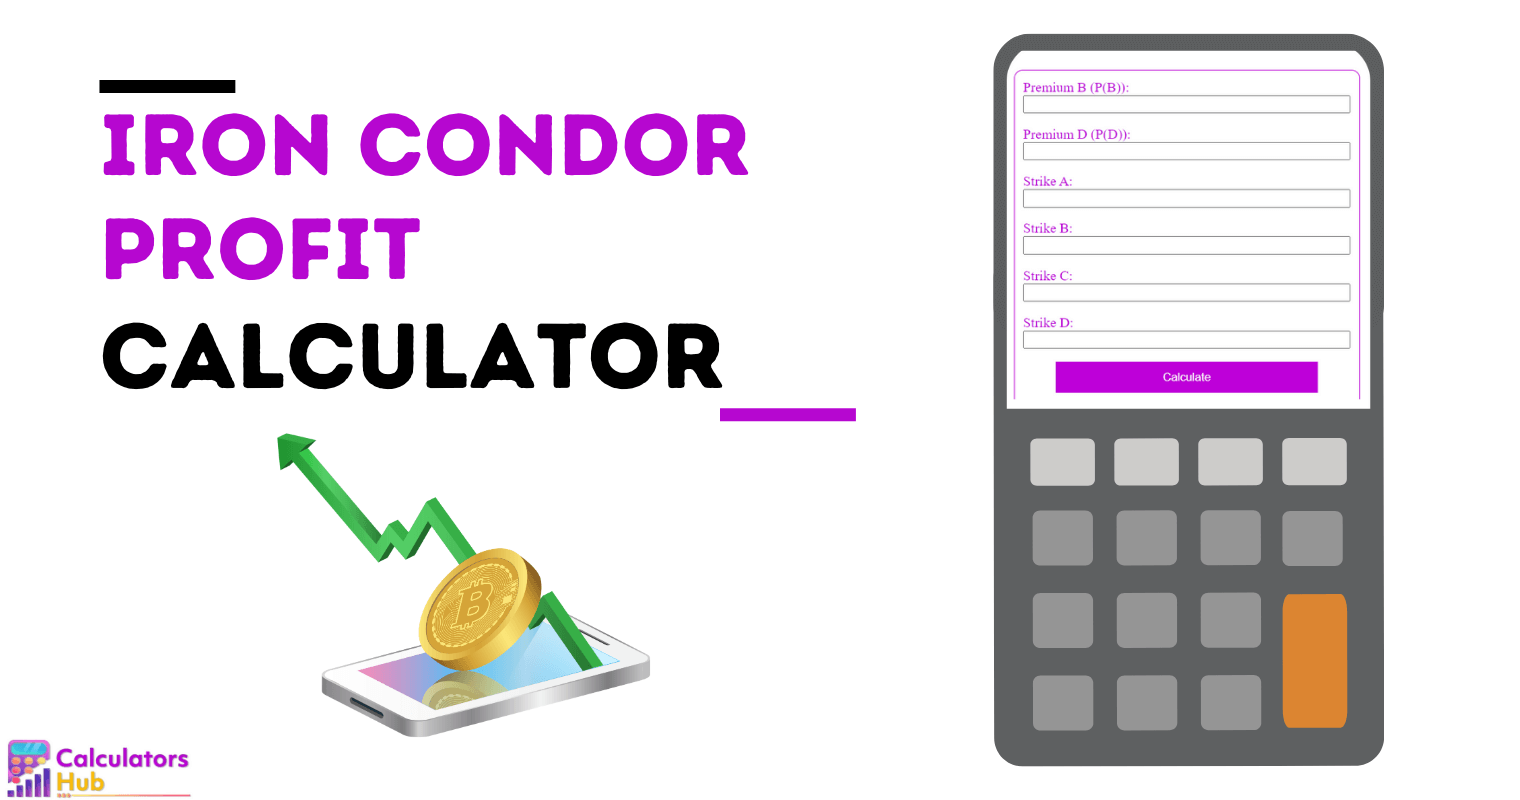 Iron Condor Profit Calculator Guide